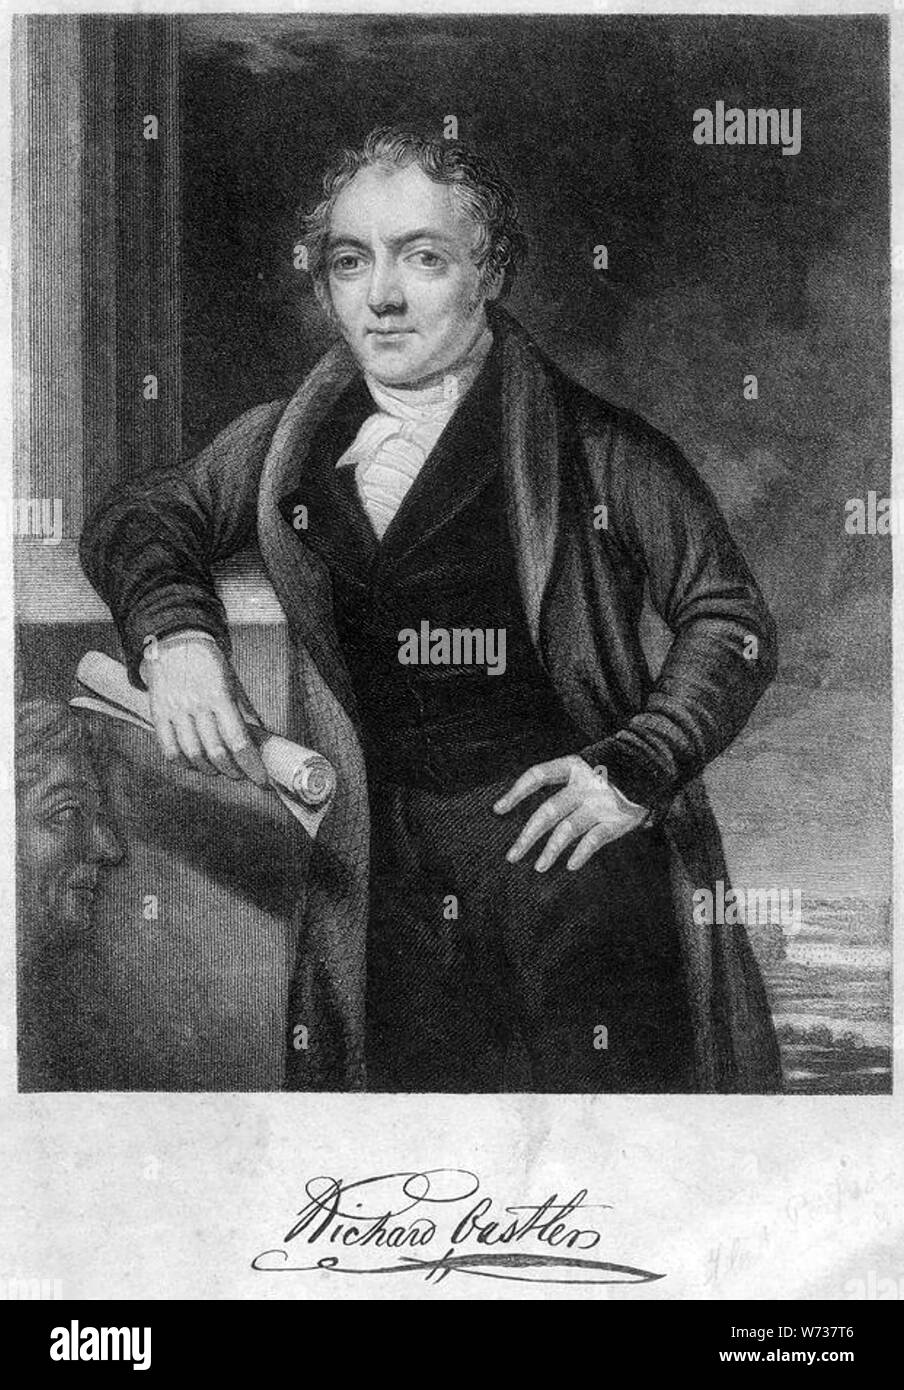 RICHARD OSTLER (1789-1861) político Tory radical Foto de stock